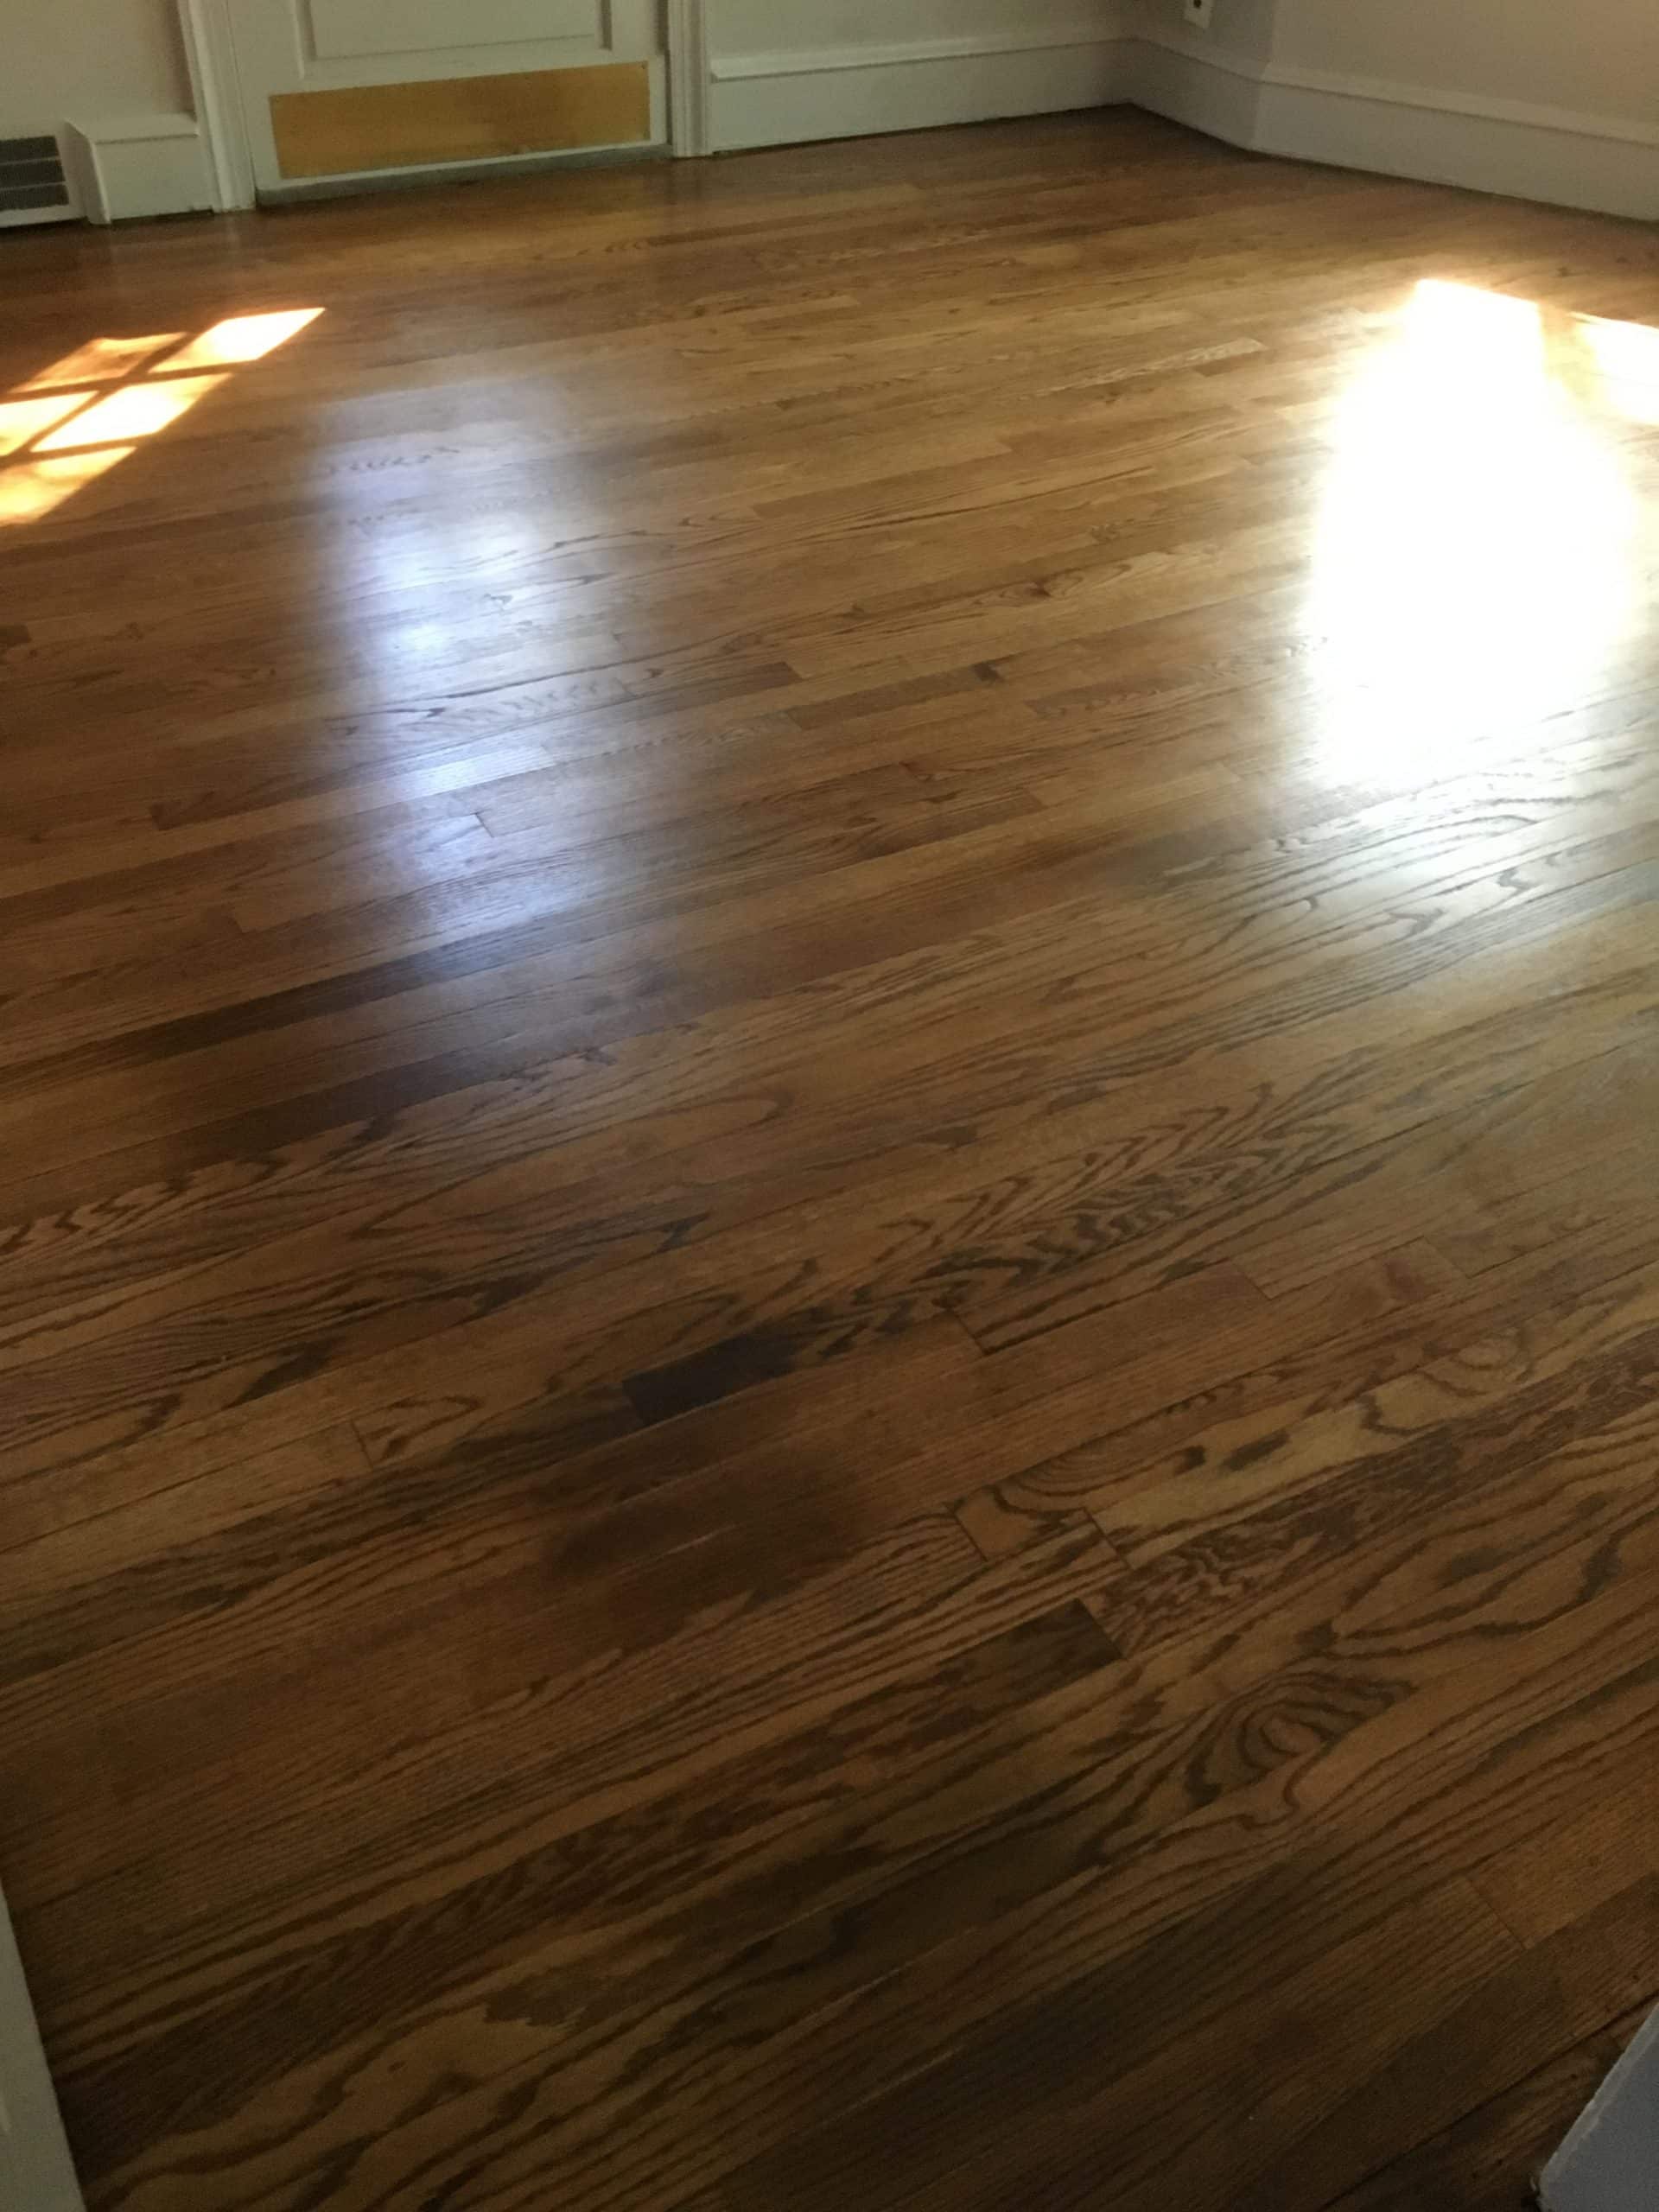 Newly installed hardwood flooring